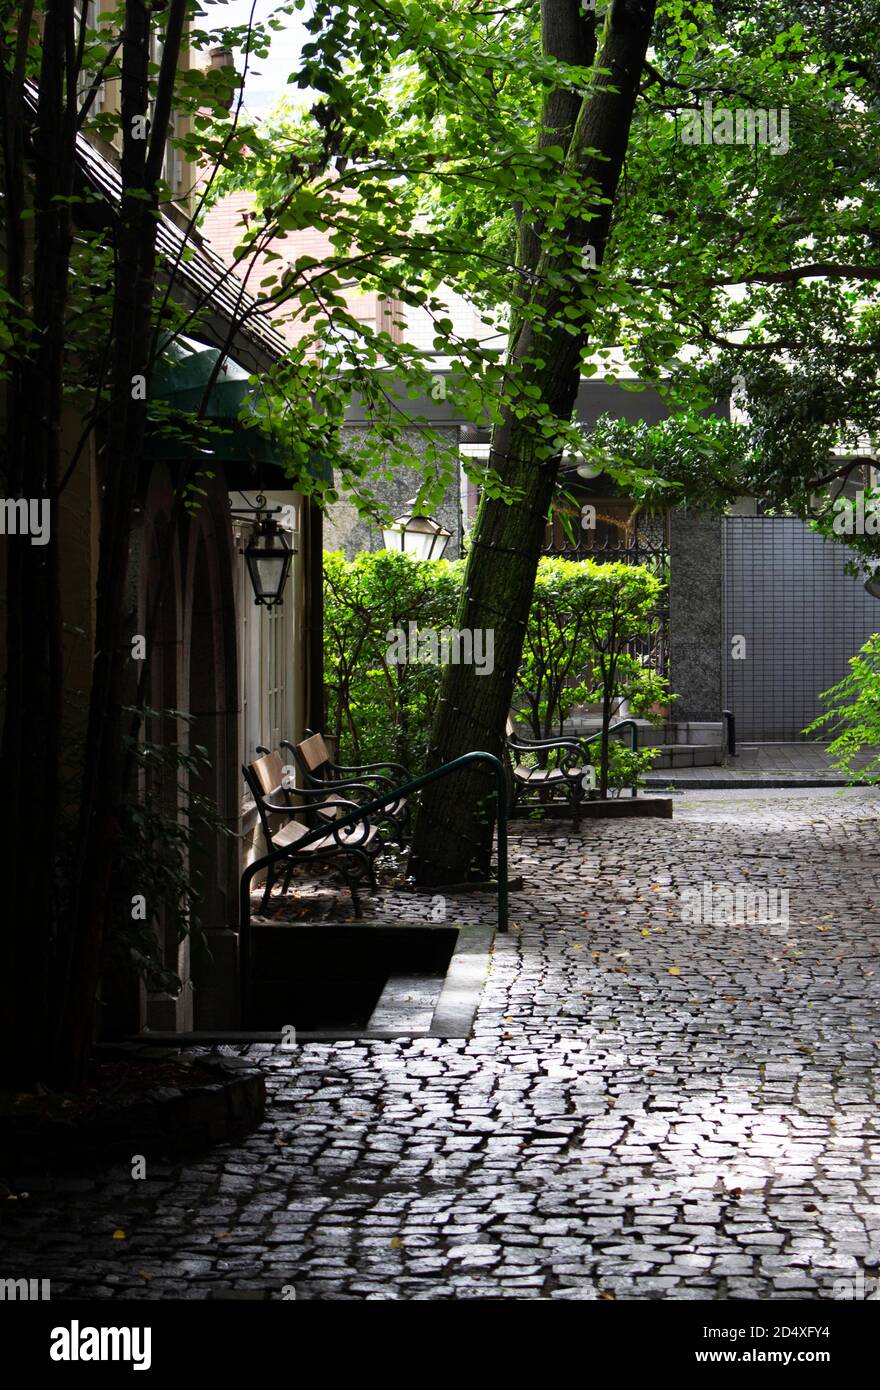 European style cobblestone courtyard with antique benches Stock Photo